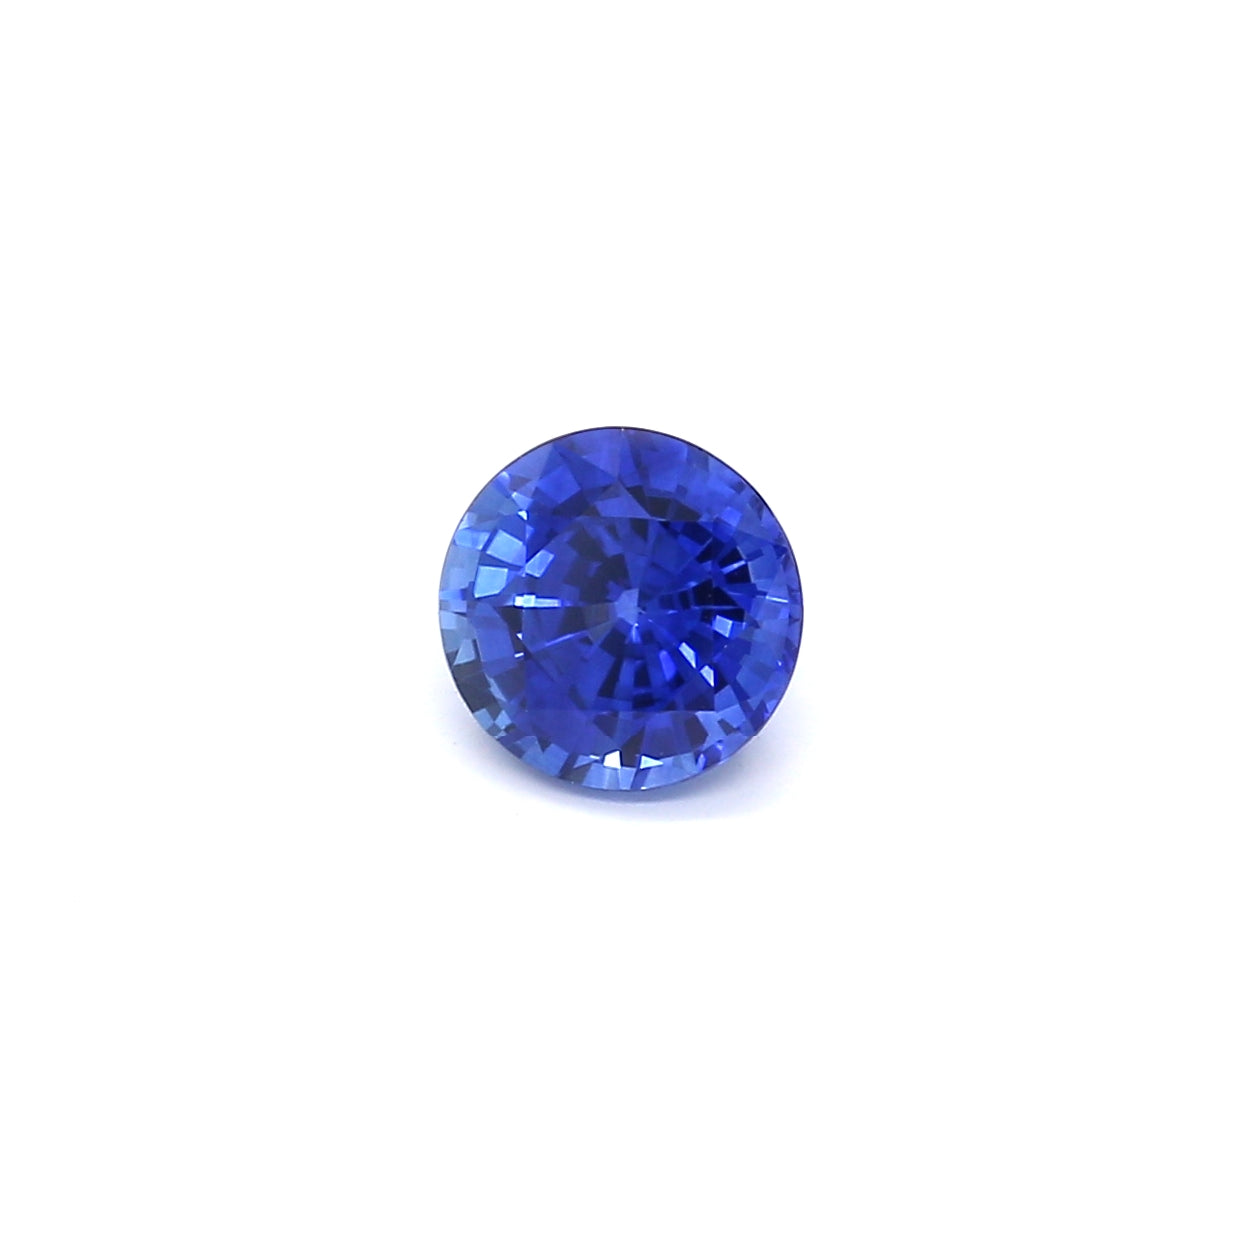 1.31ct Round Sapphire, Heated, Sri Lanka - 6.41 x 6.43 x 4.25mm